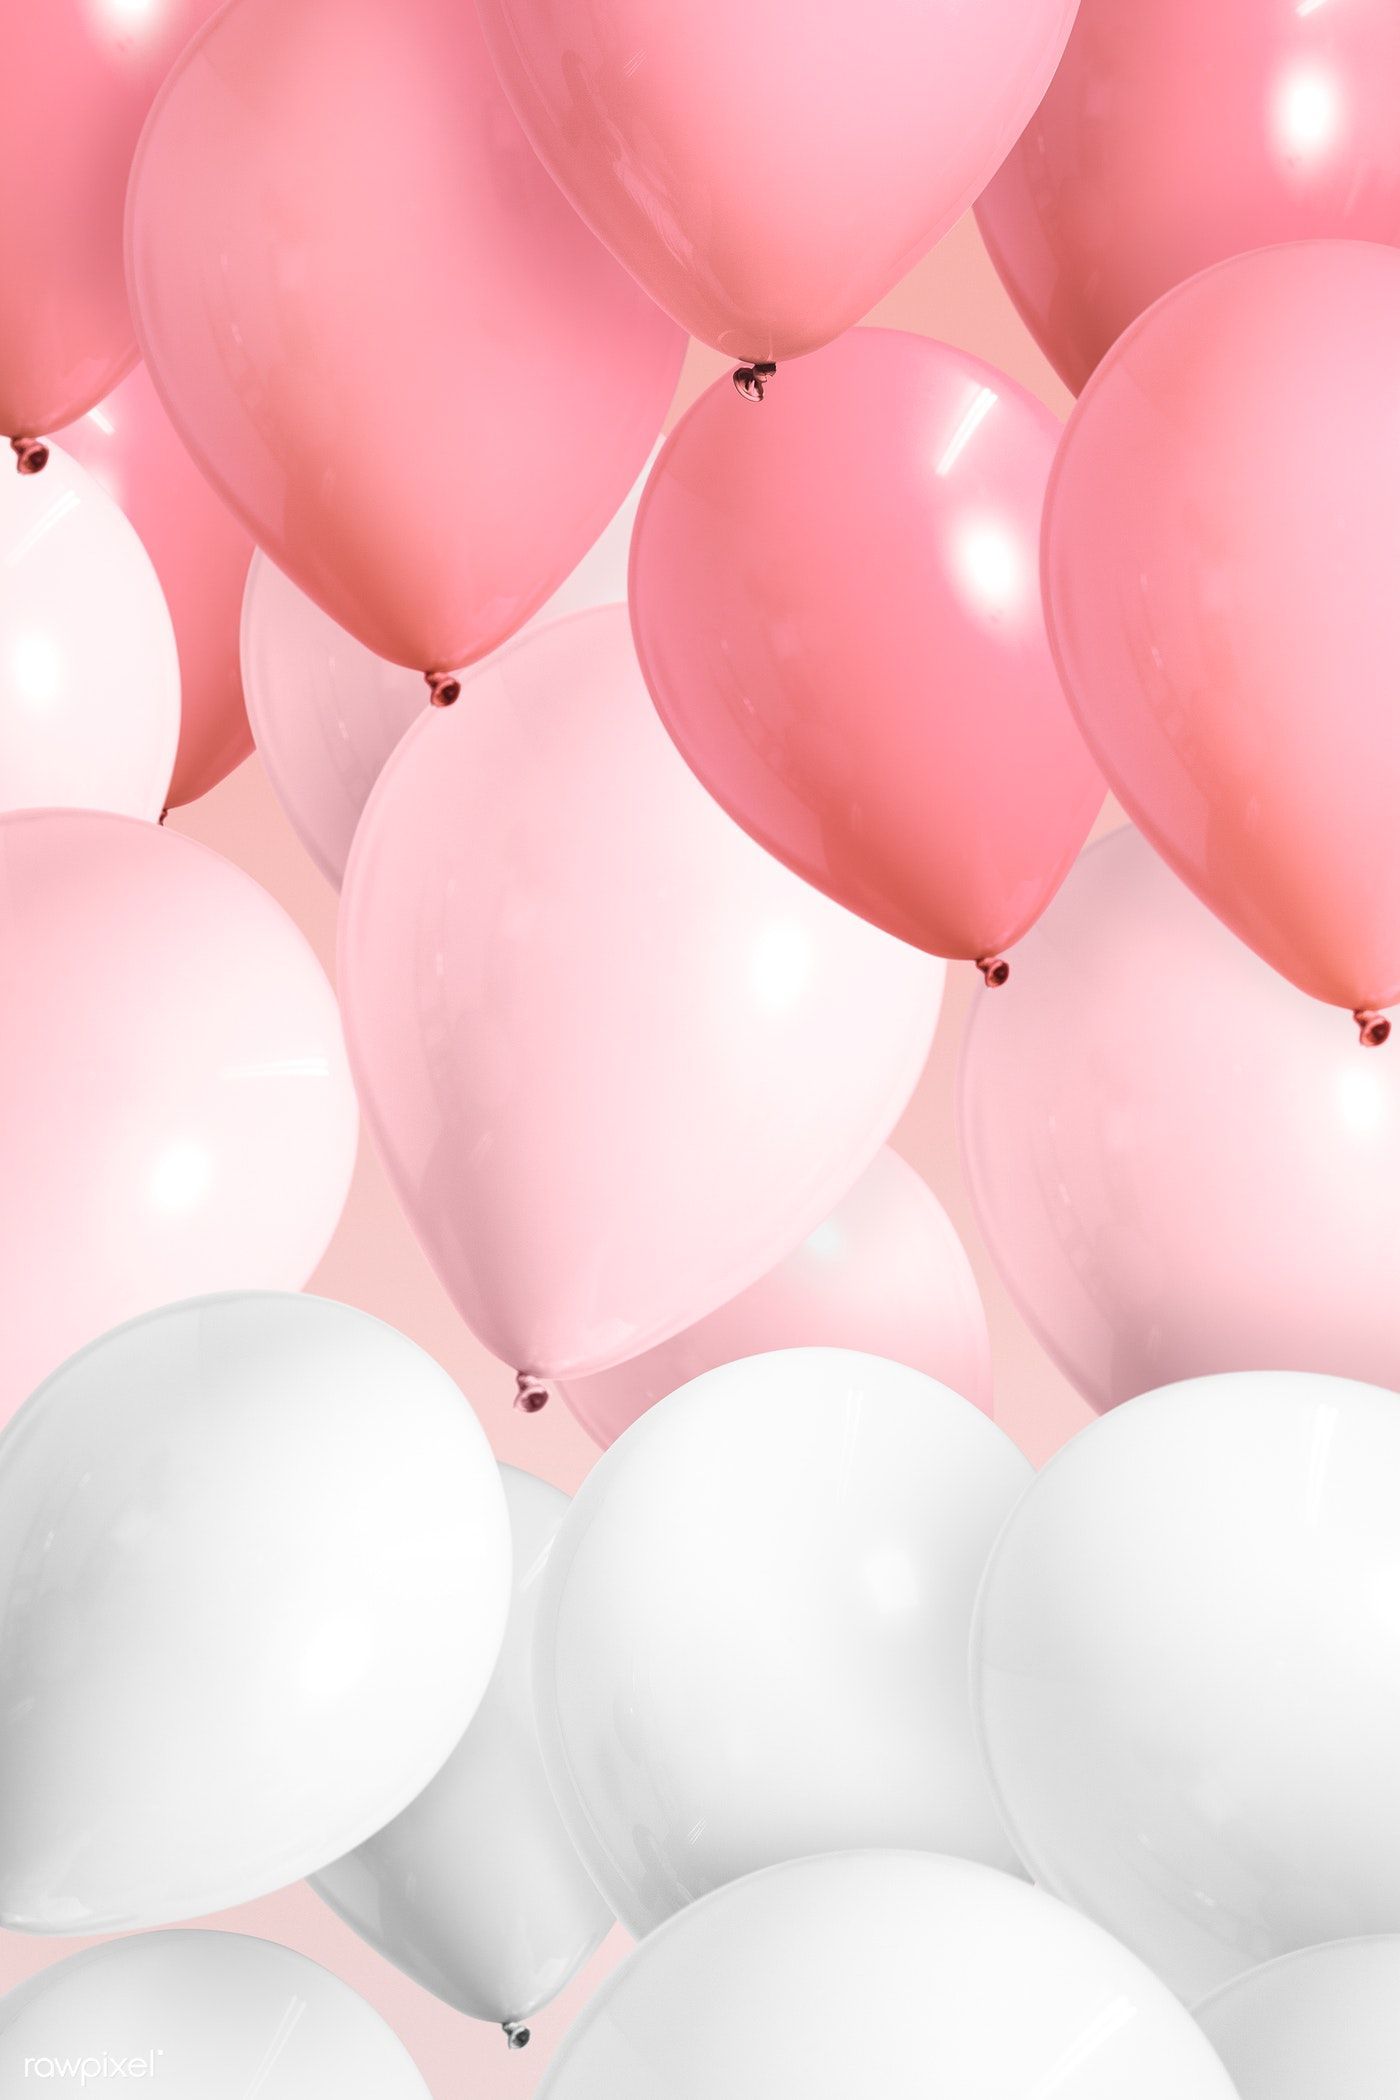 Festive pastel pink balloon wallpaper .com